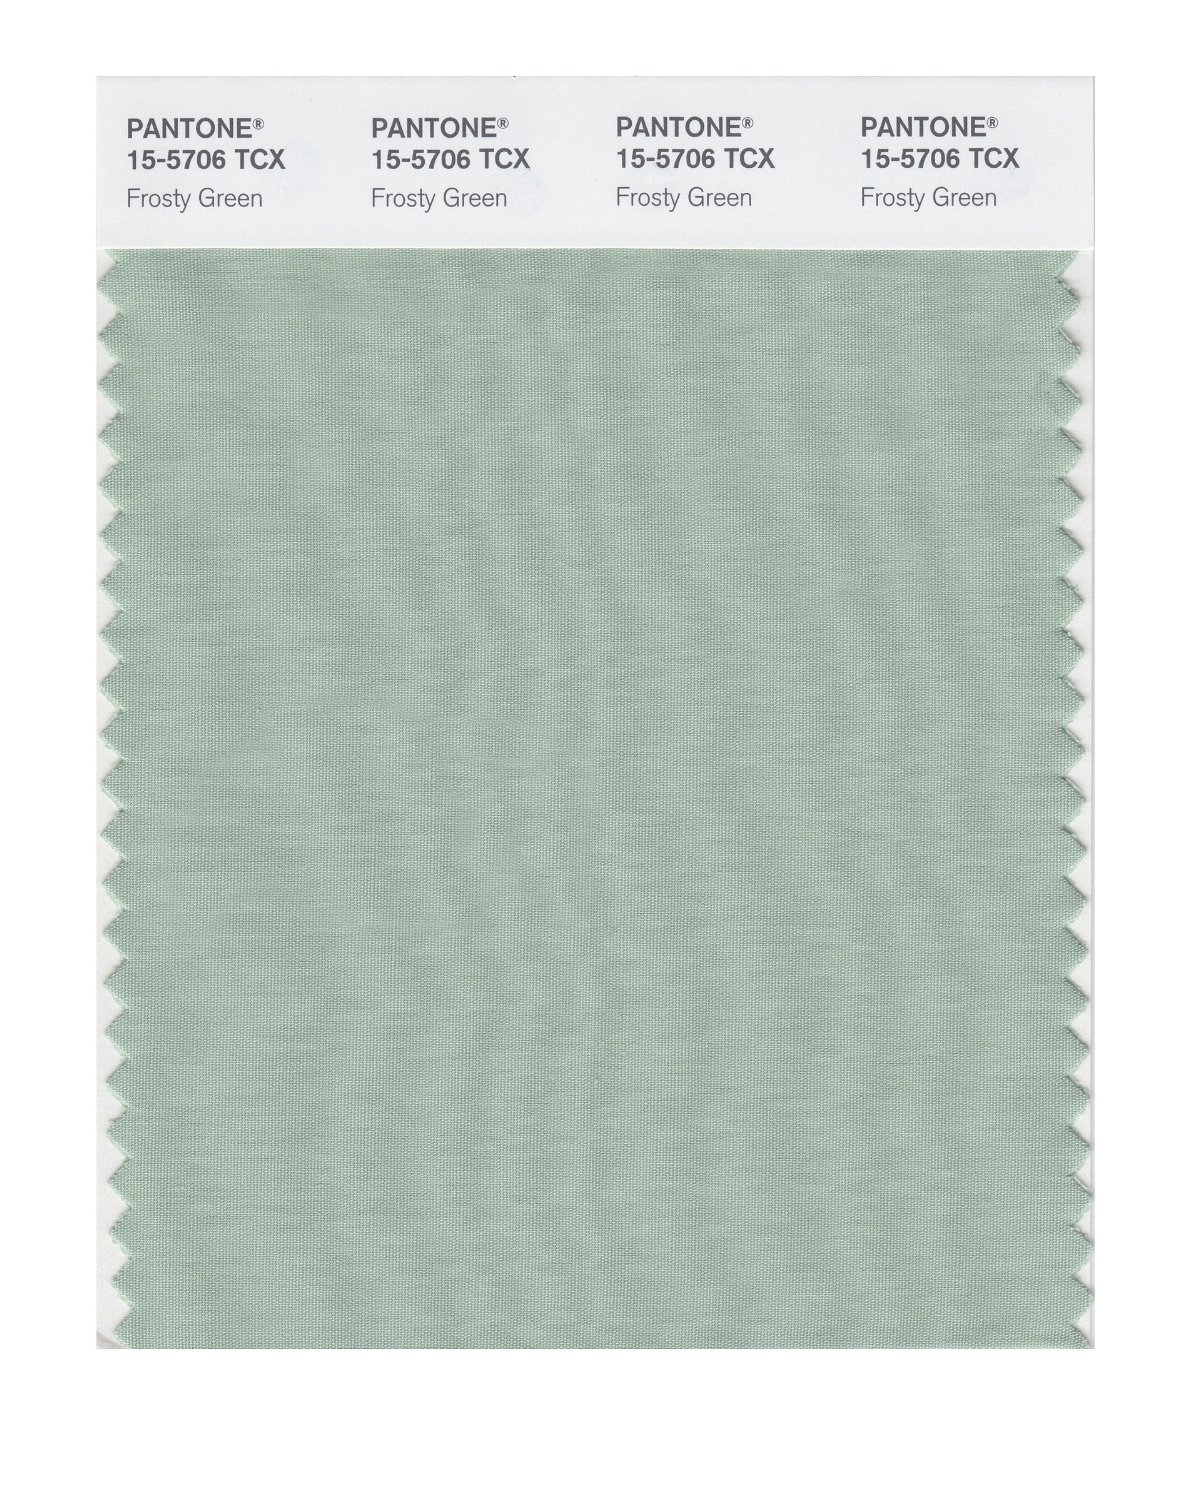 Pantone Cotton Swatch 15-5706 Frosty Green